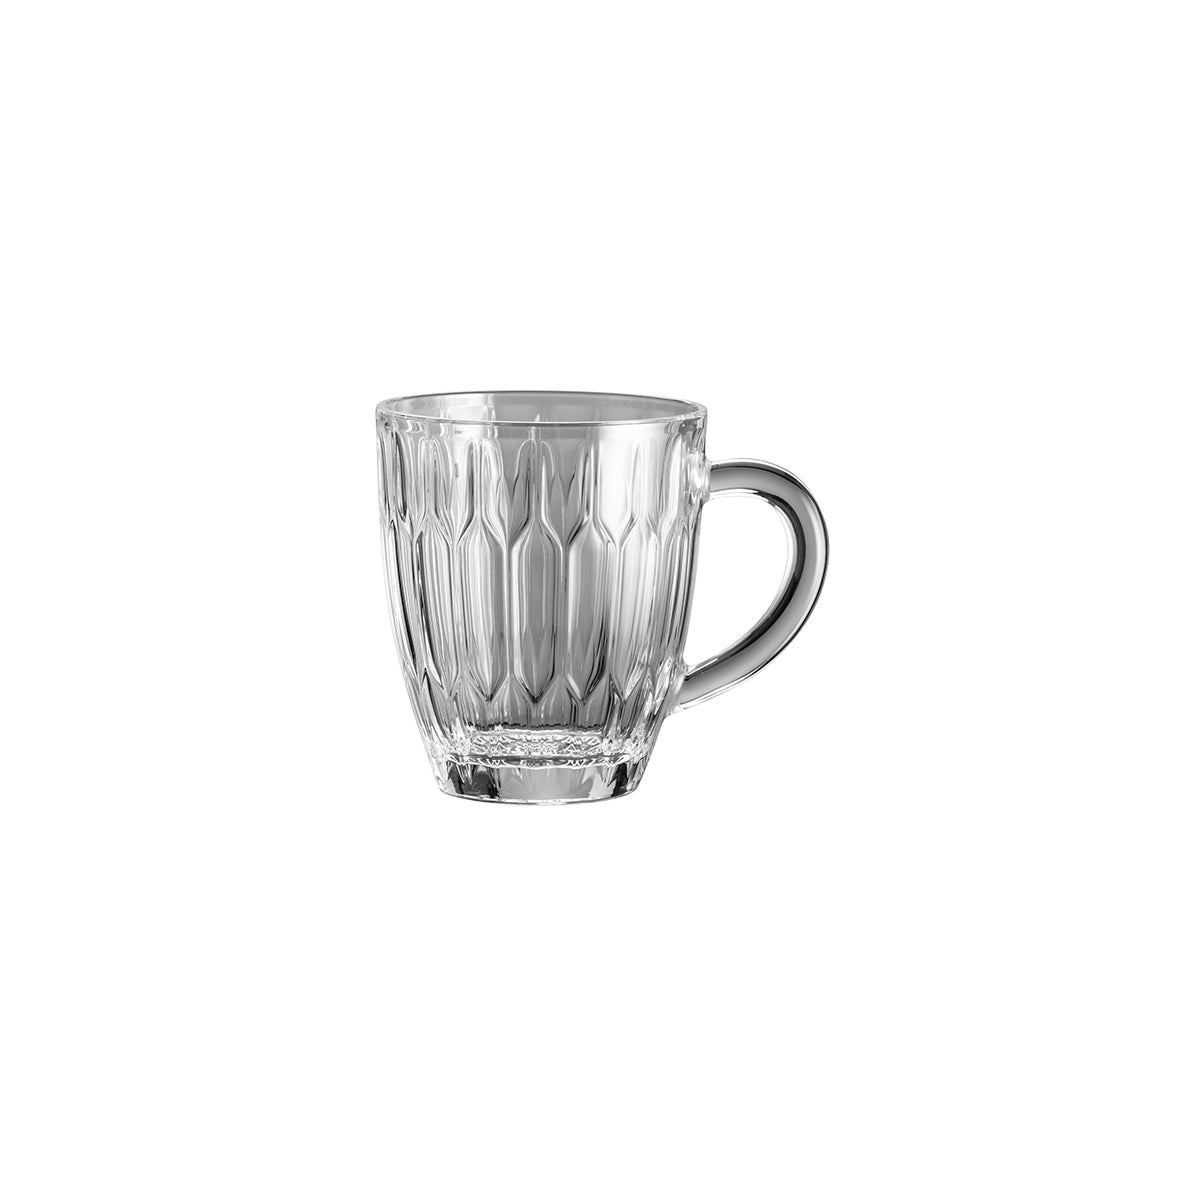 55.0118.0003 WMF Coffee / Tea Glass with Handle 295ml Tomkin Australia Hospitality Supplies